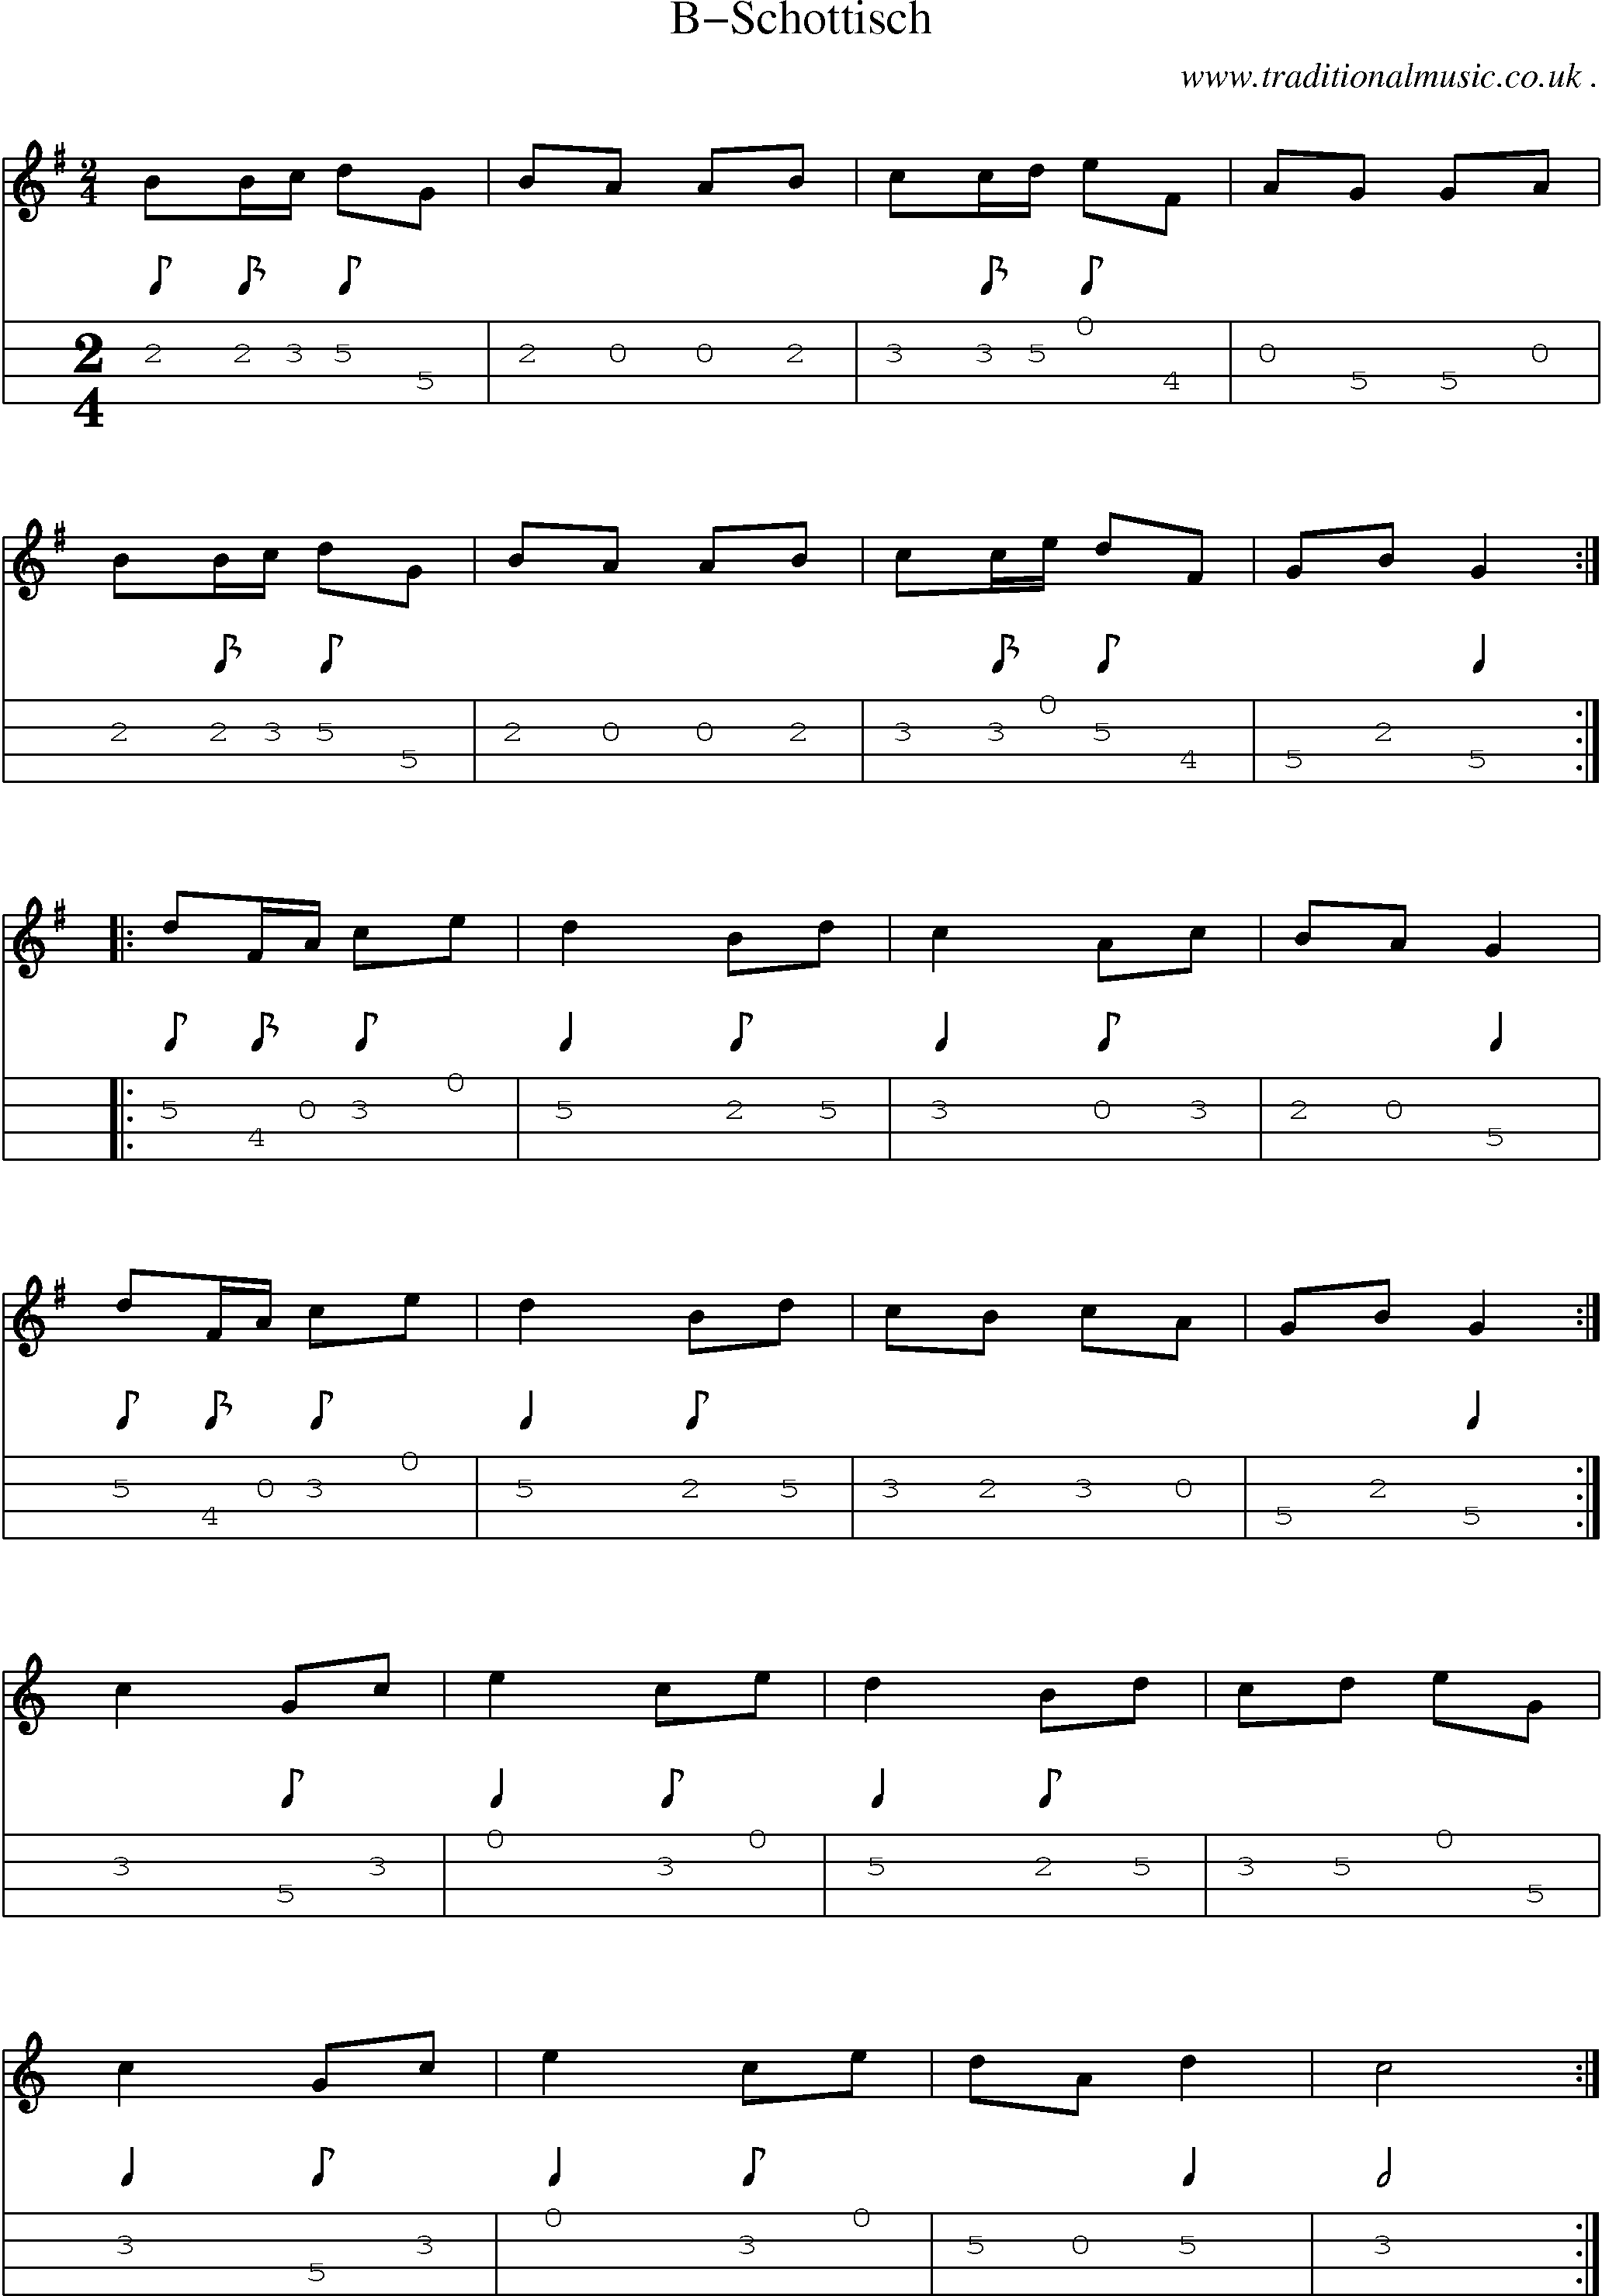 Sheet-Music and Mandolin Tabs for B-schottisch